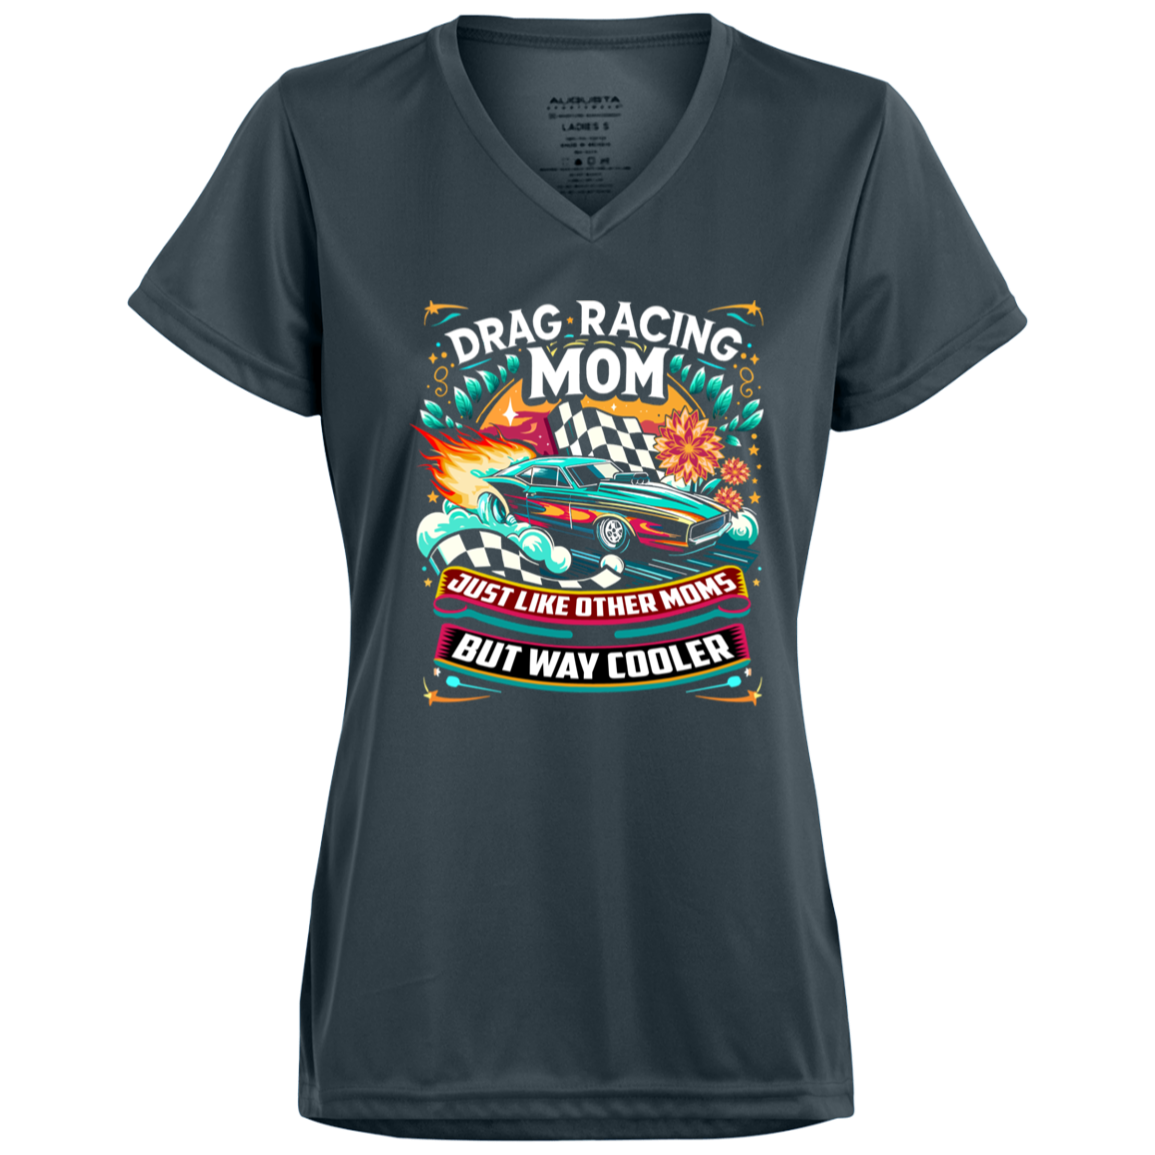 Drag Racing Mom Just Like Other Moms V-Neck t-Shirts